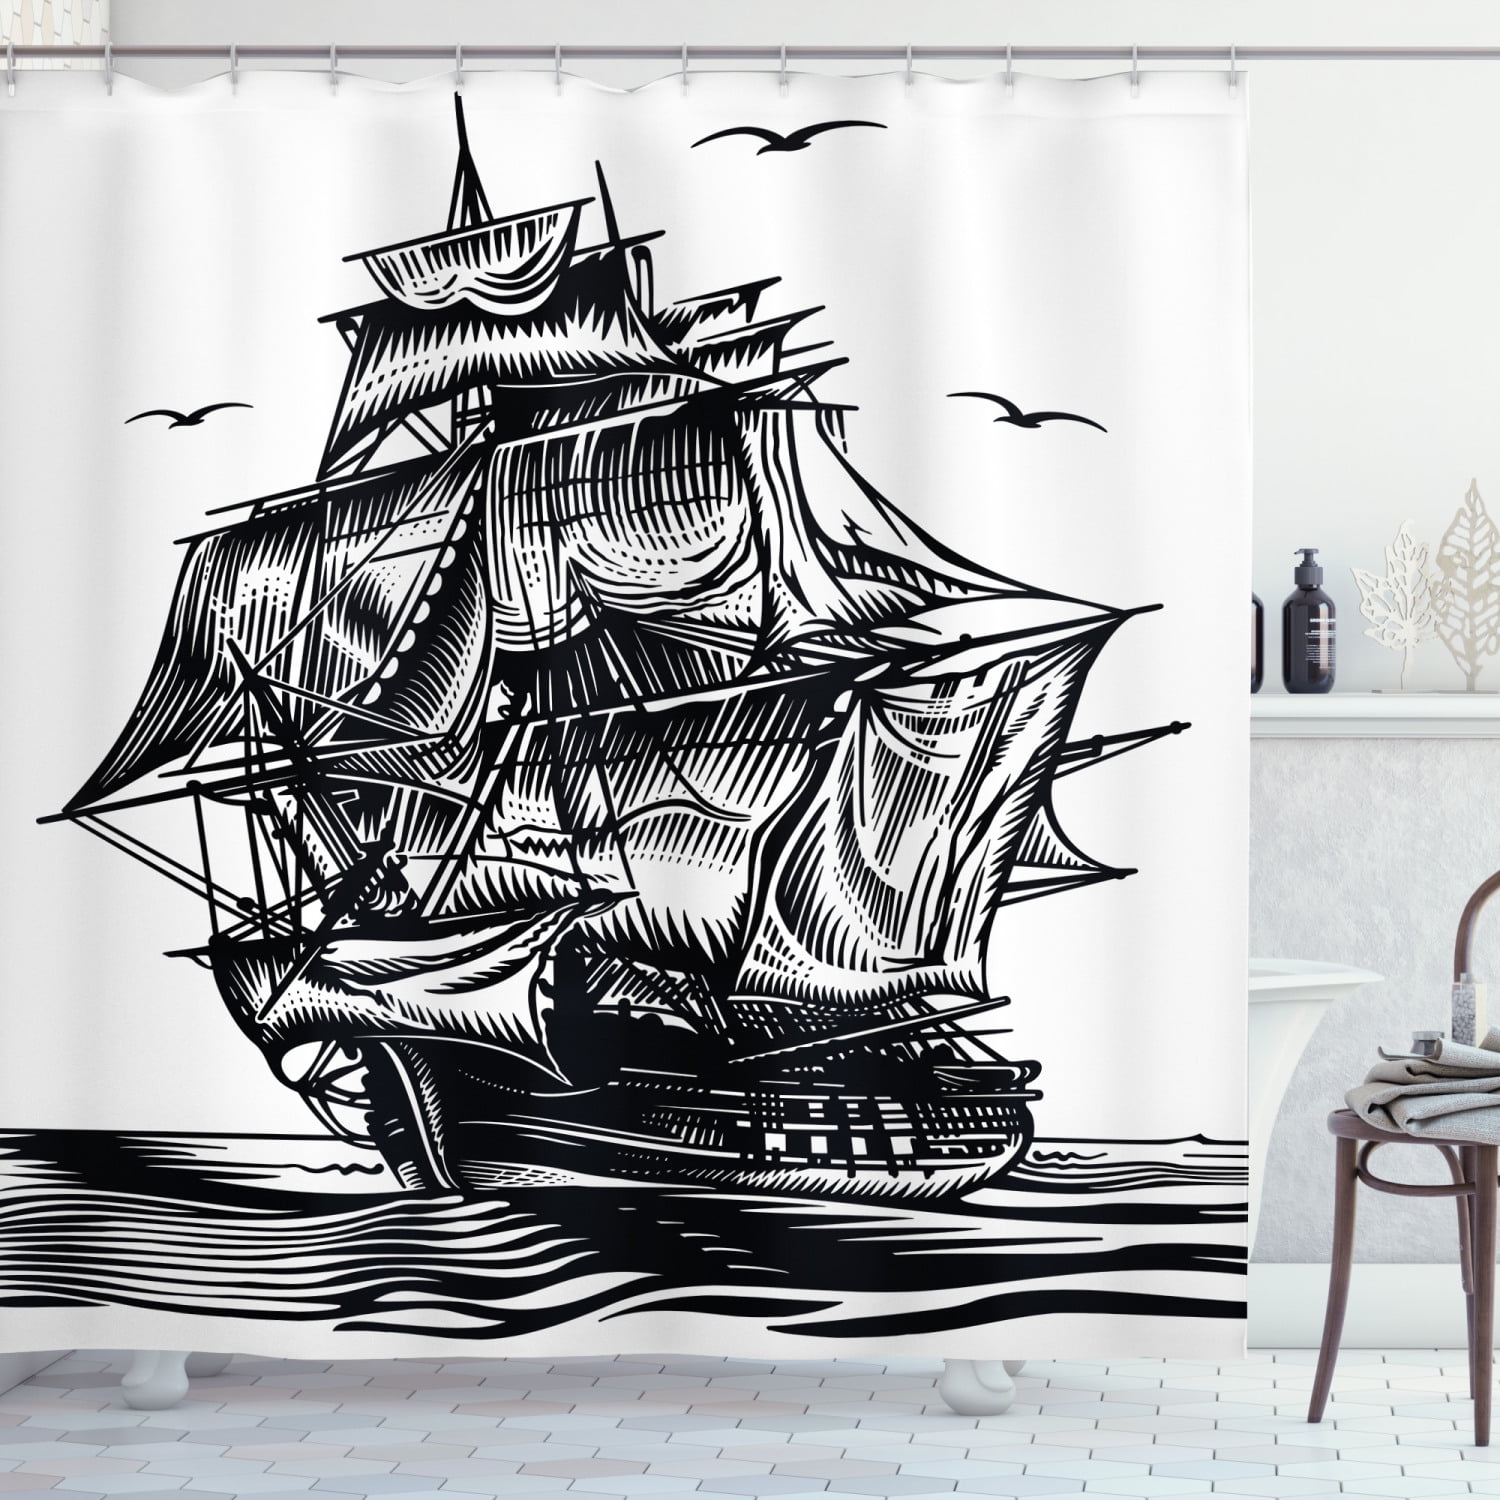 Pirate Ocean Adventure Bathroom Waterproof Fabric Shower Curtain Hooks Set 72" 